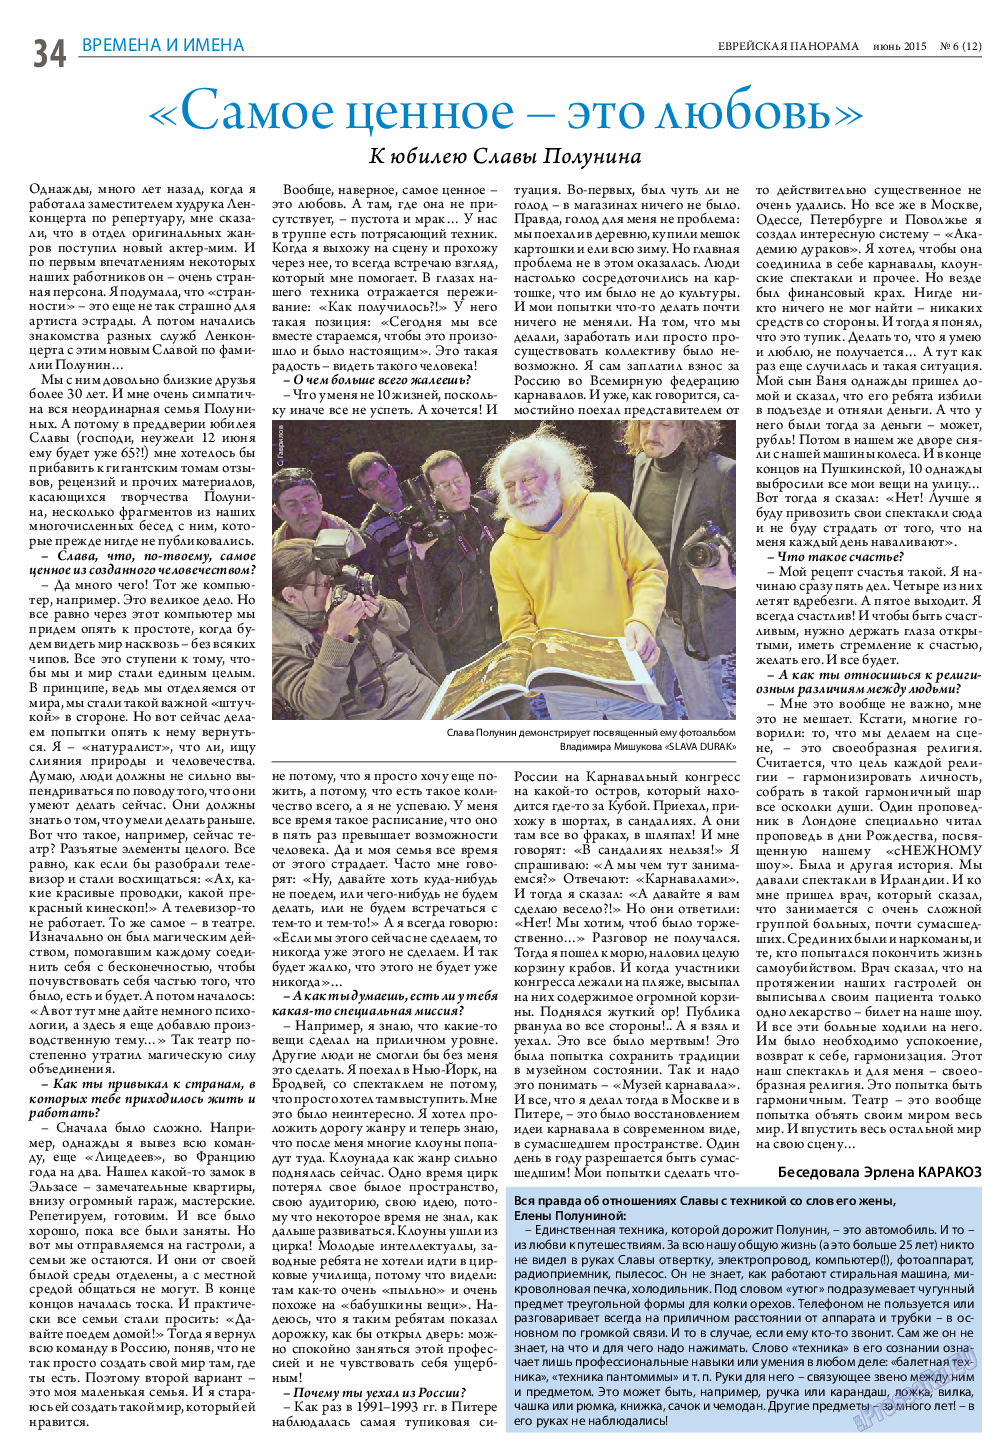 Еврейская панорама, газета. 2015 №6 стр.34